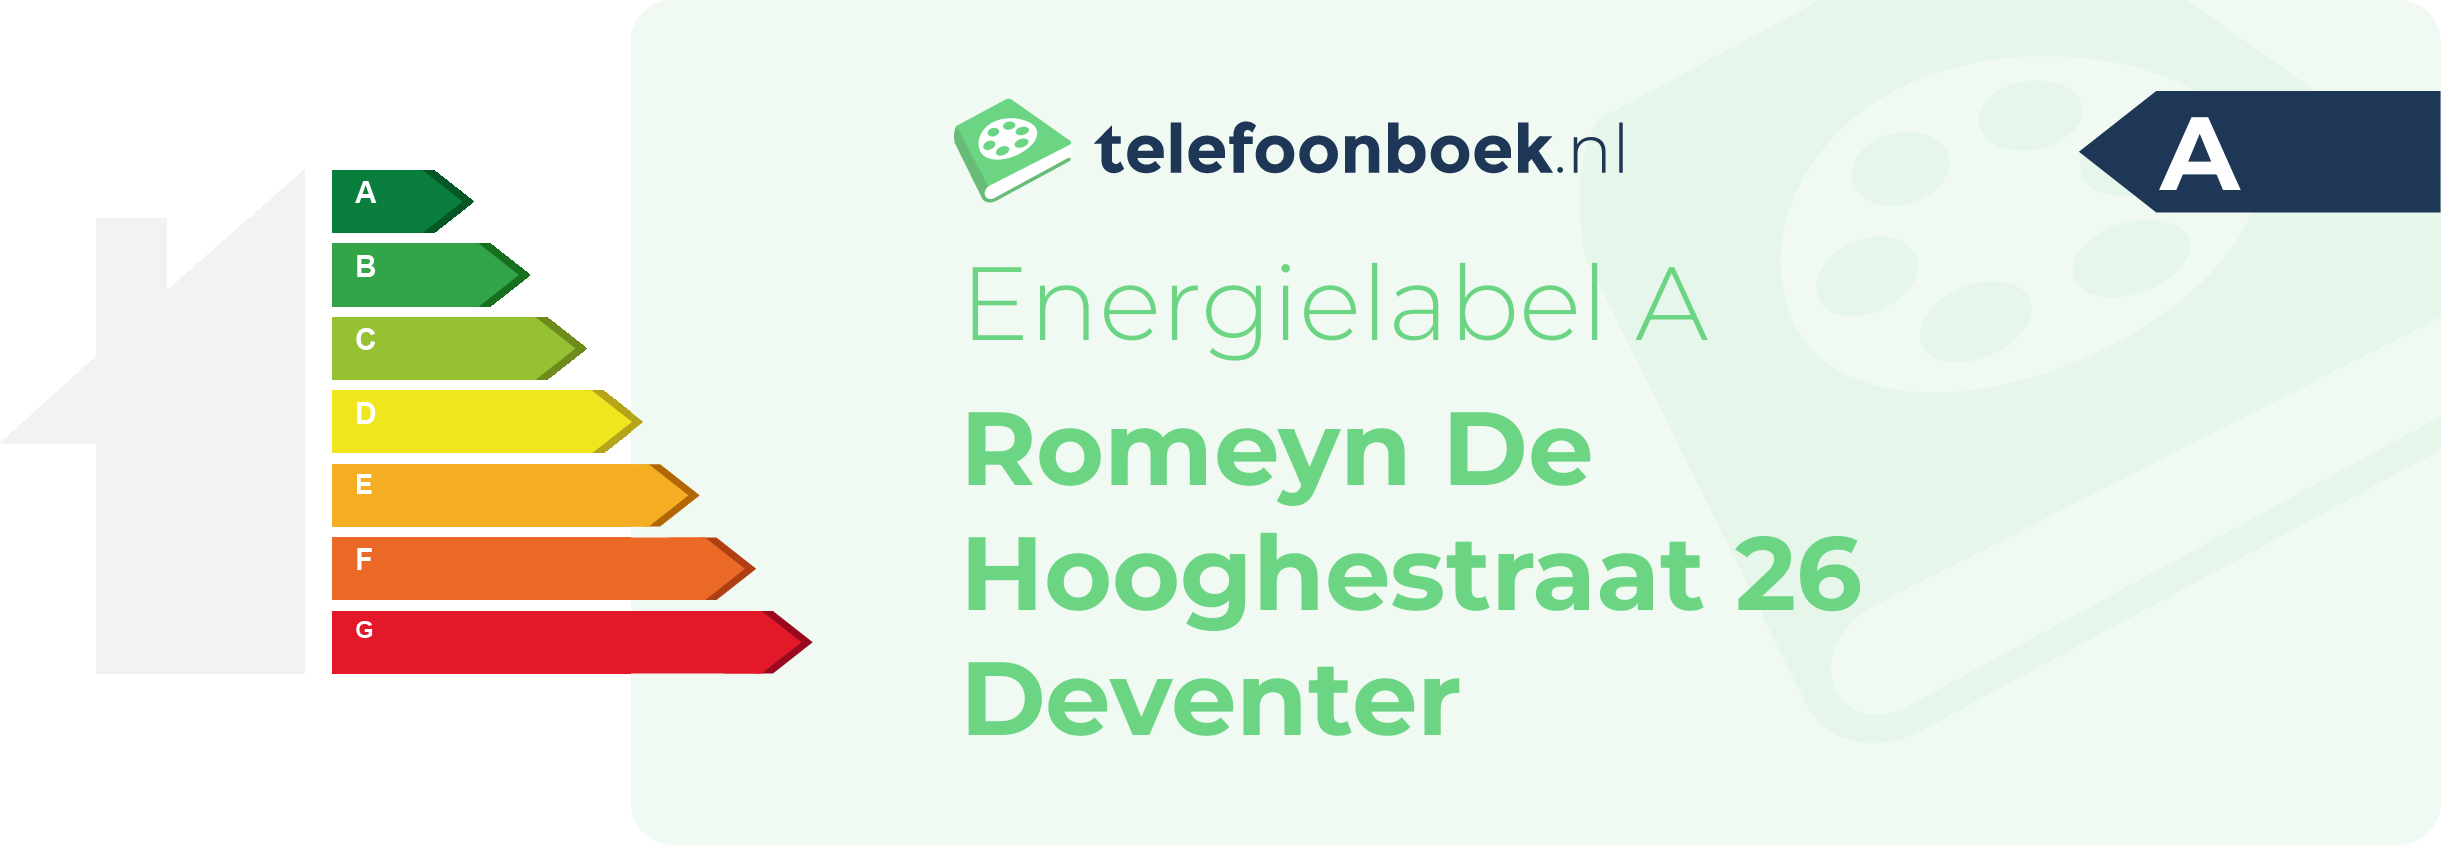 Energielabel Romeyn De Hooghestraat 26 Deventer